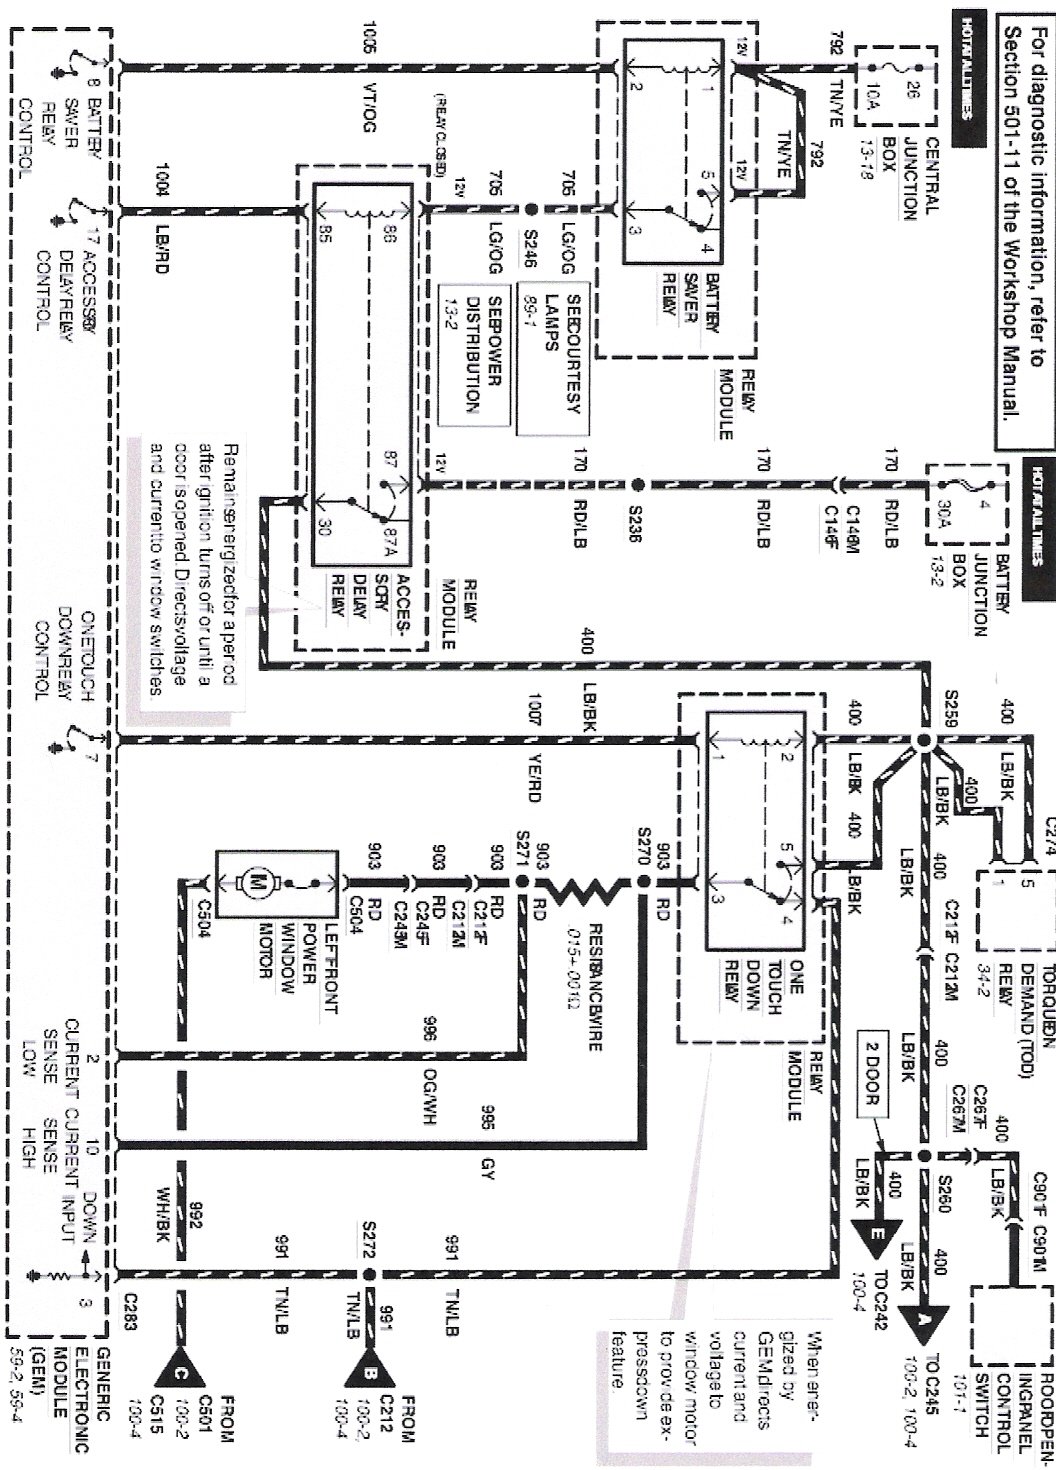 Wiring Diagram PDF: 2002 Mercury Mountaineer Wiring Diagram